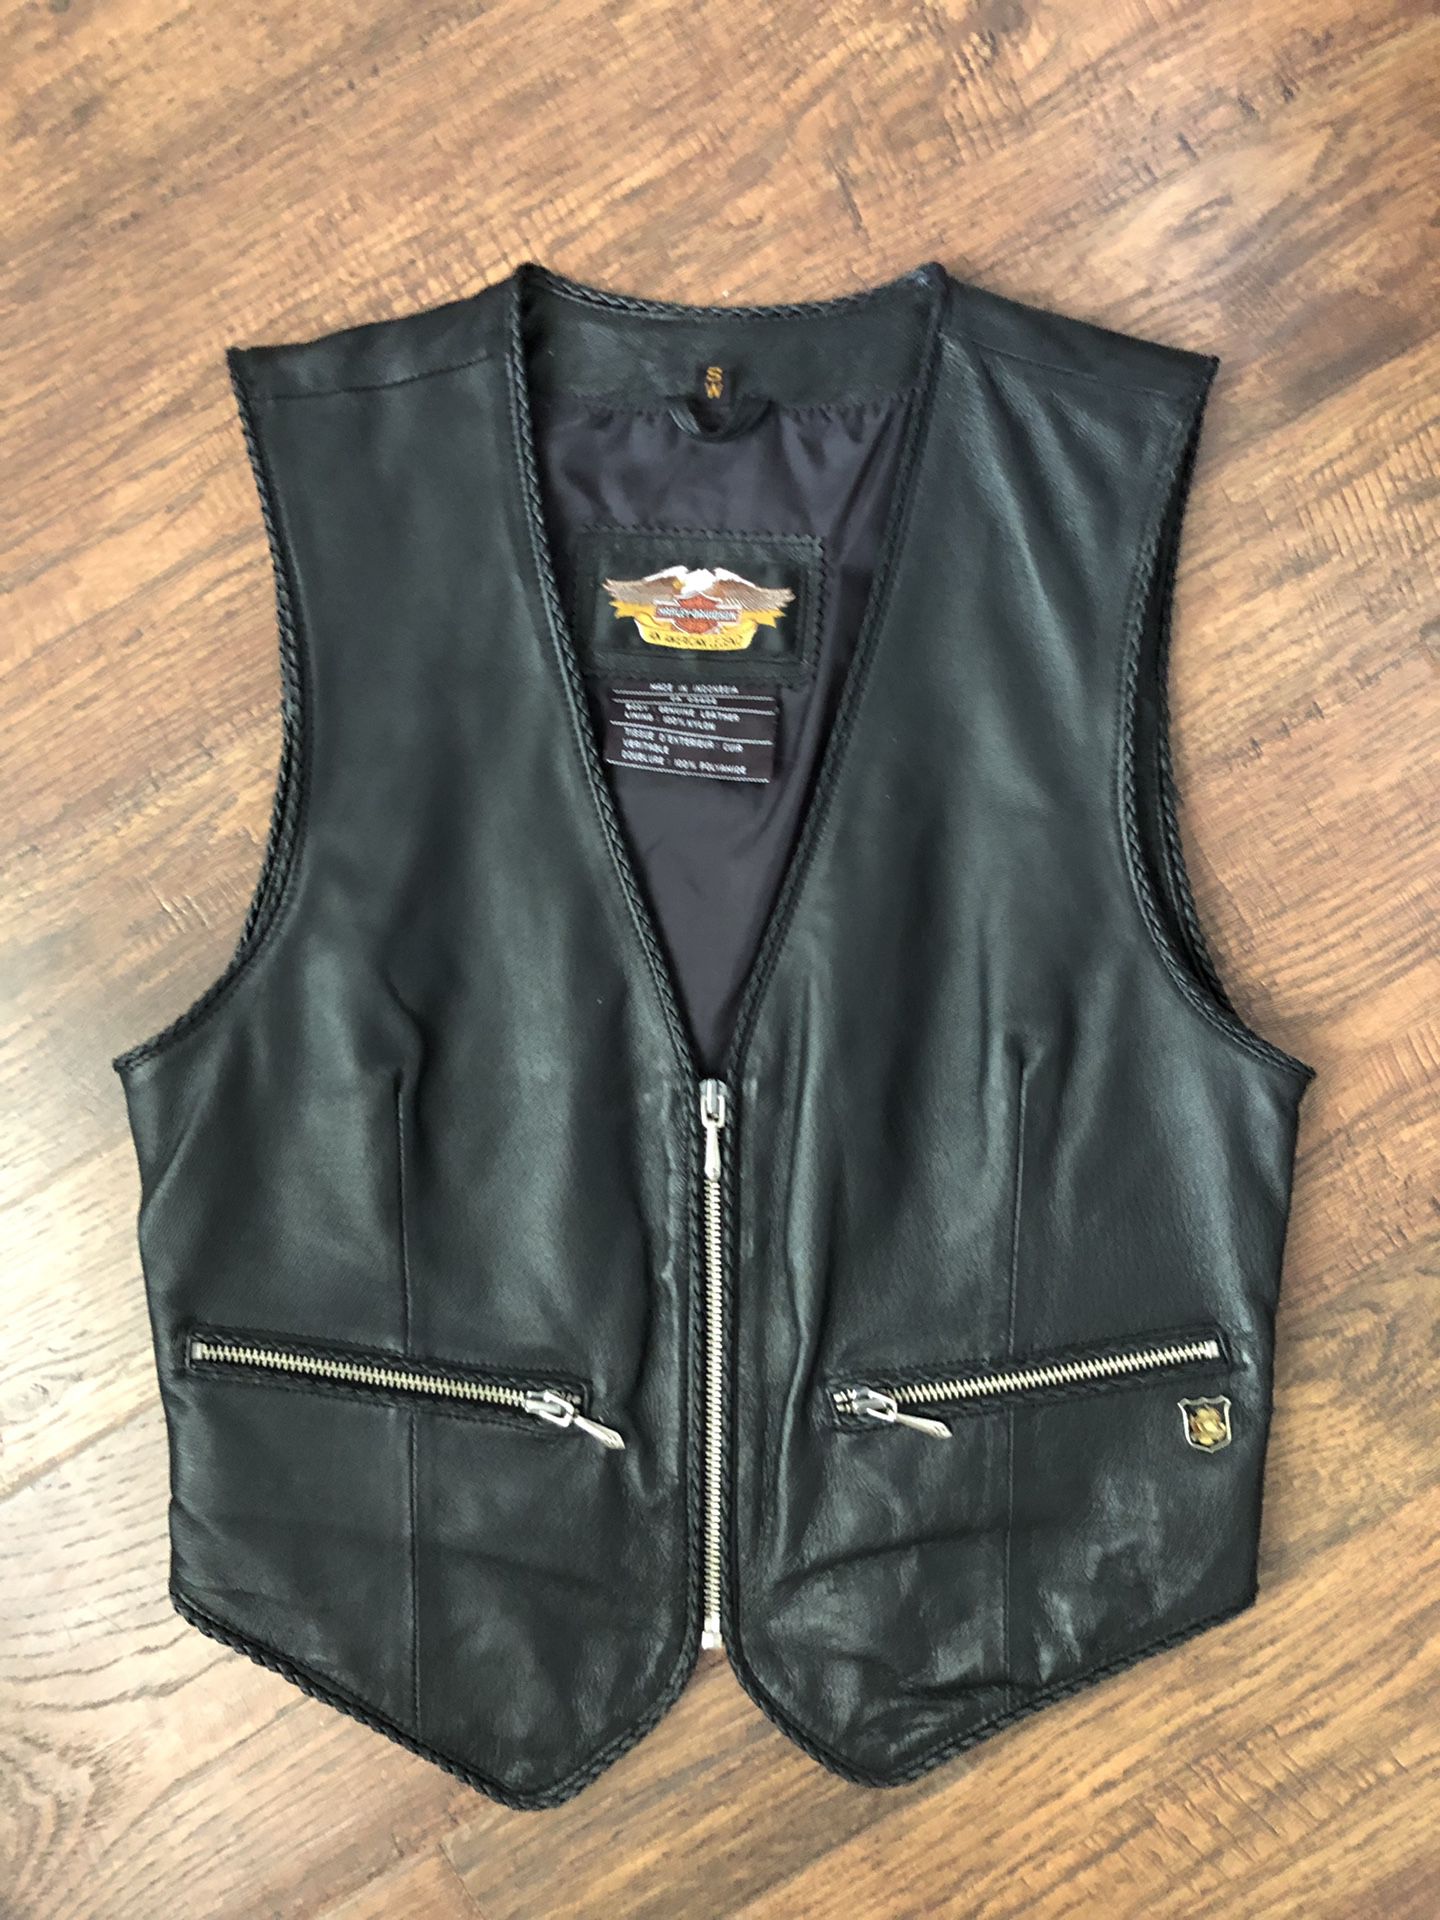 Genuine Harley Davidson women’s leather vest